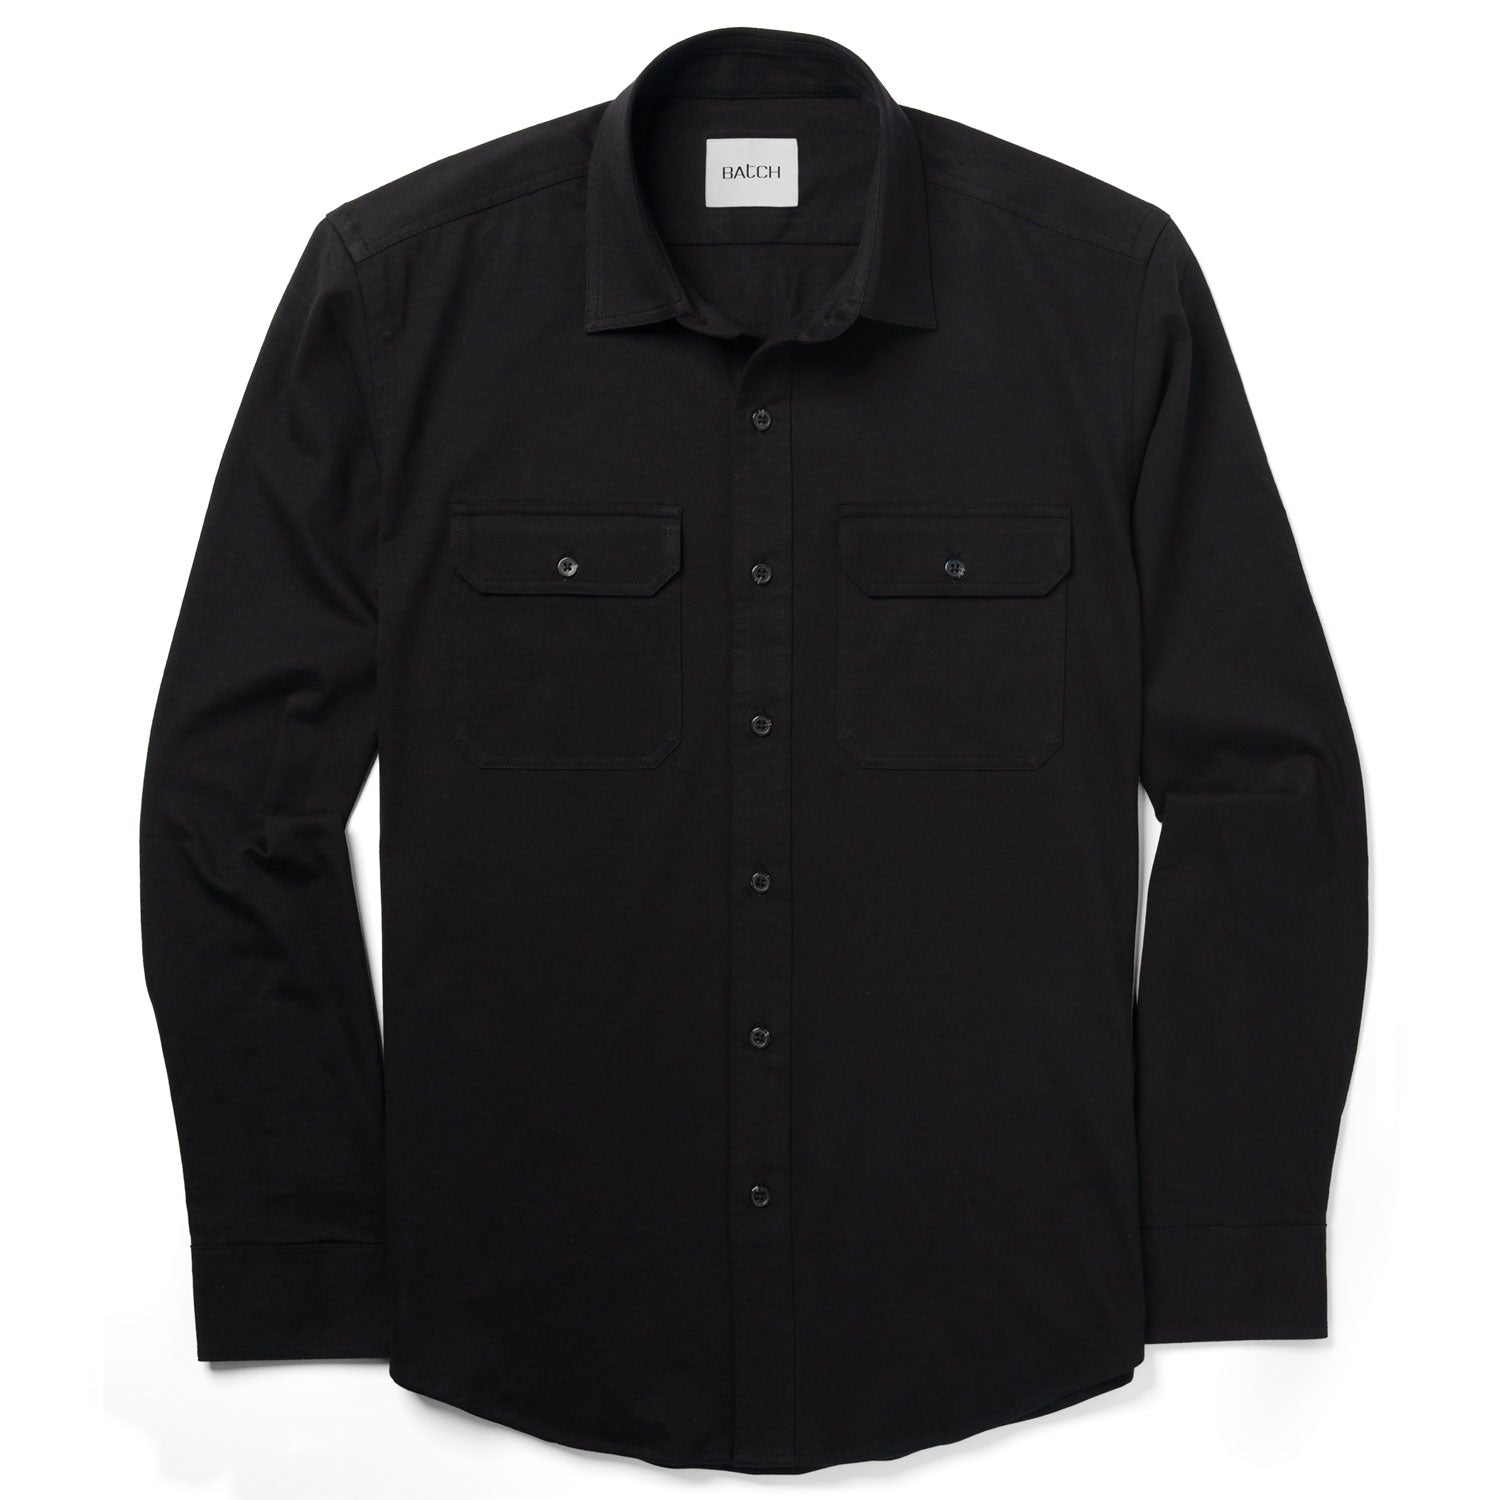 Constructor Knit Utility Shirt – Black Cotton Jersey